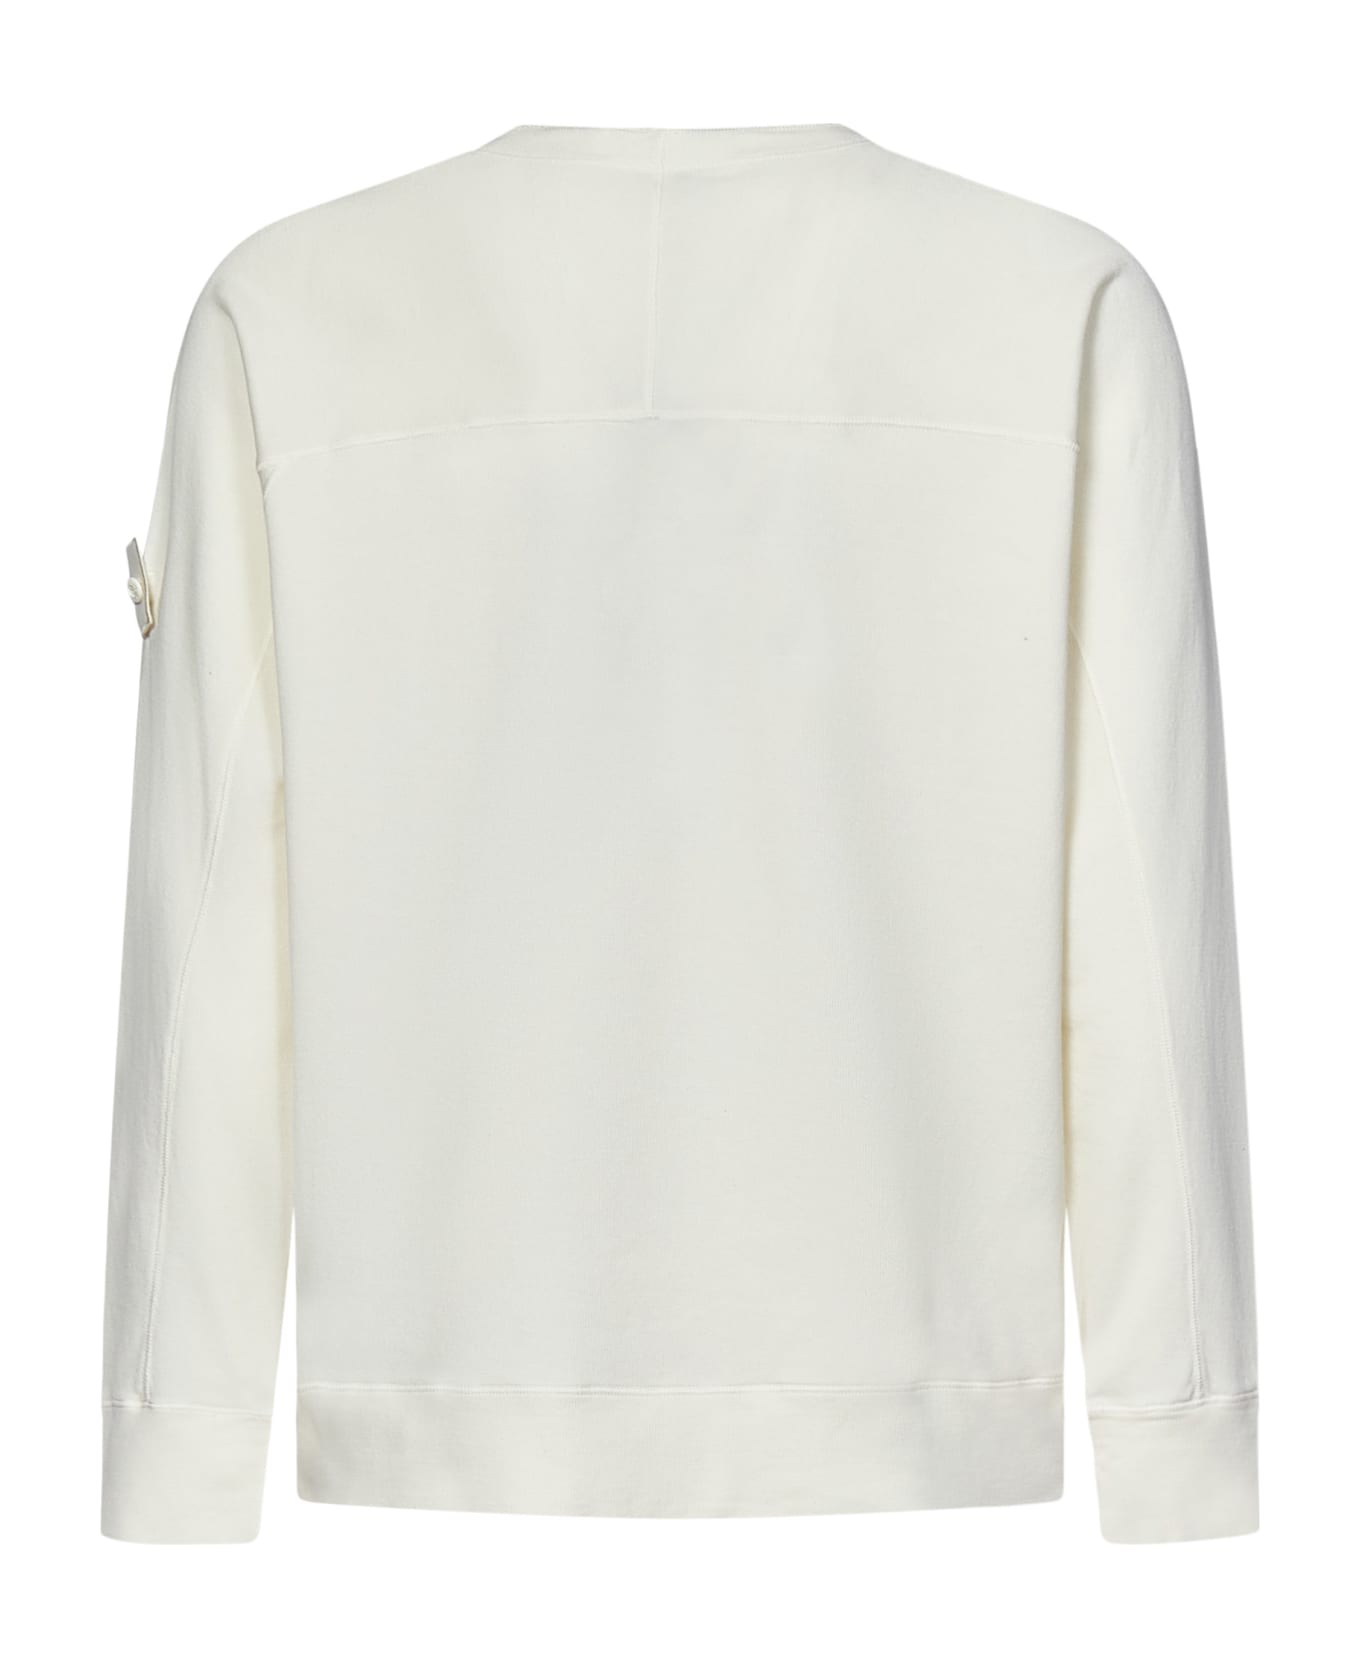 Stone Island Ghost Piece Sweatshirt - White